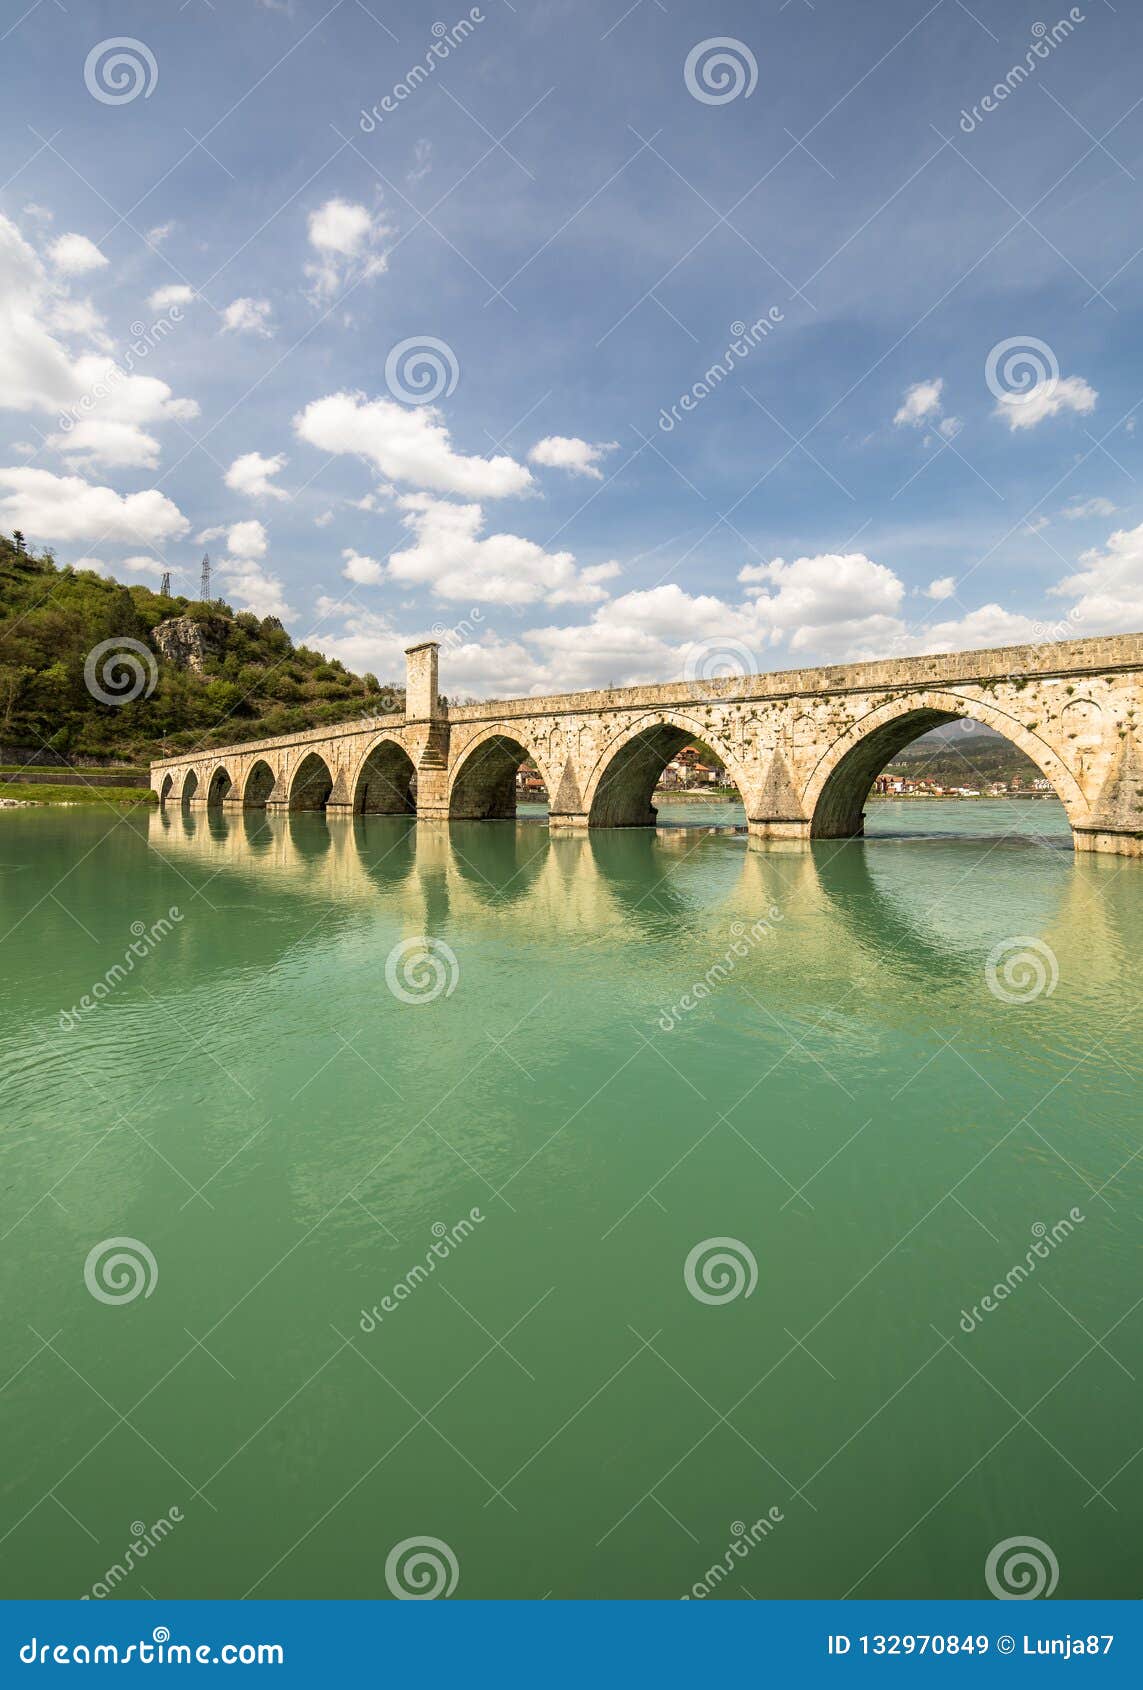 mehmed pasa sokolovic bridge in visegrad on drina